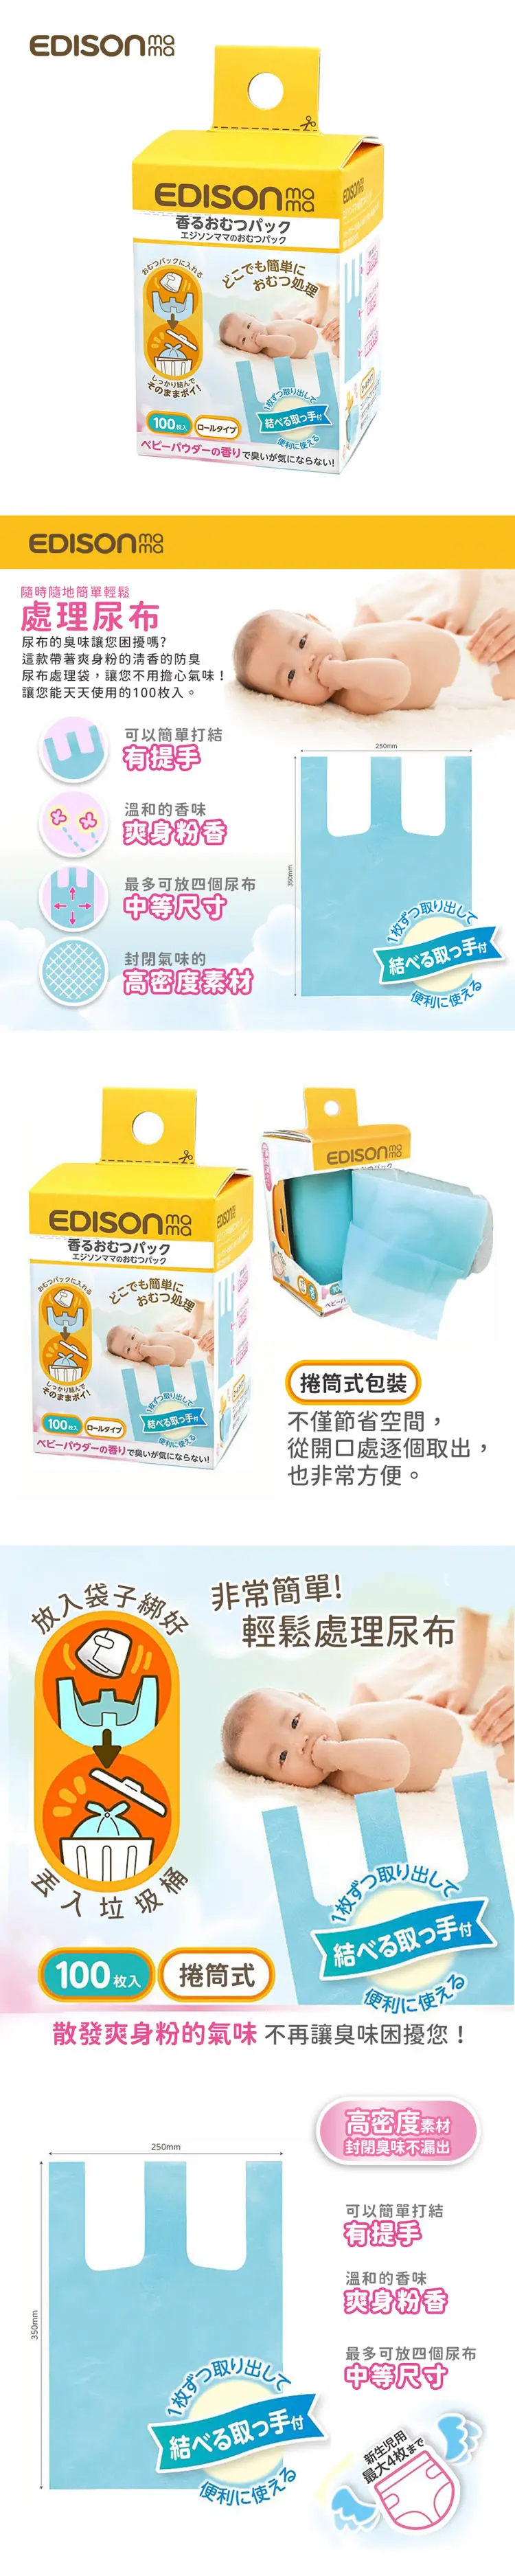 Edison 便利防臭微香尿片弃置袋